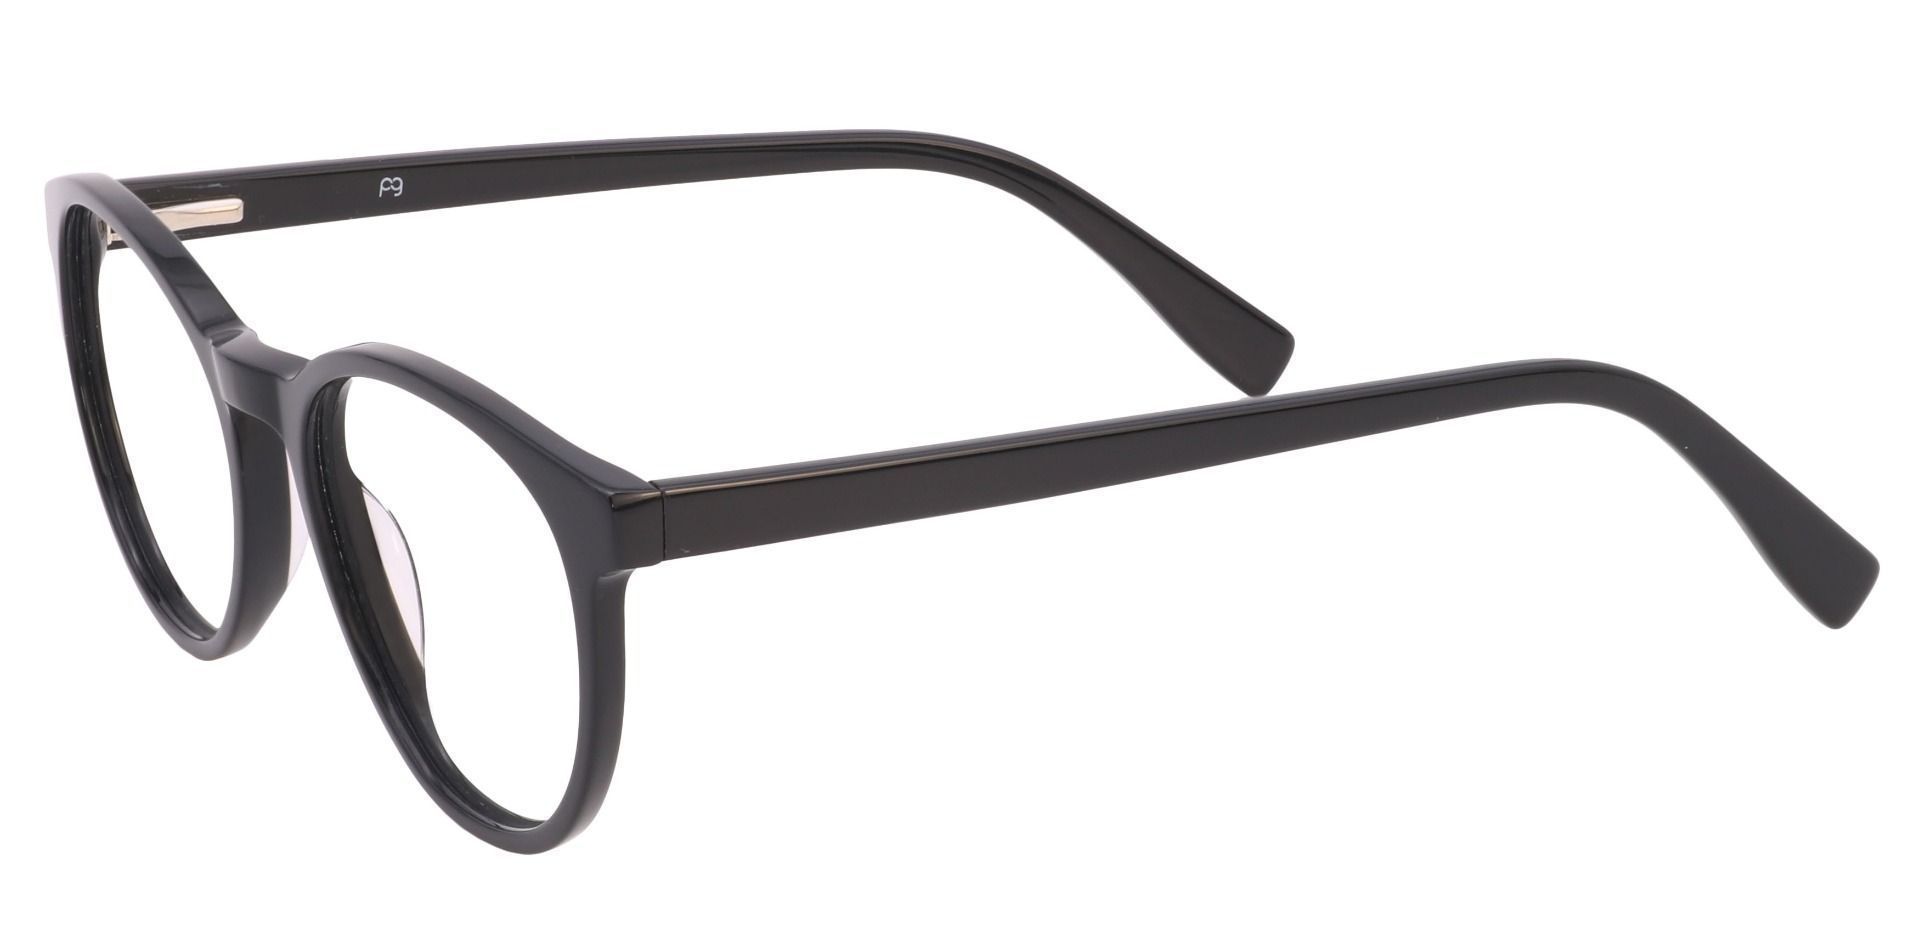 Stellar Oval Prescription Glasses - Black